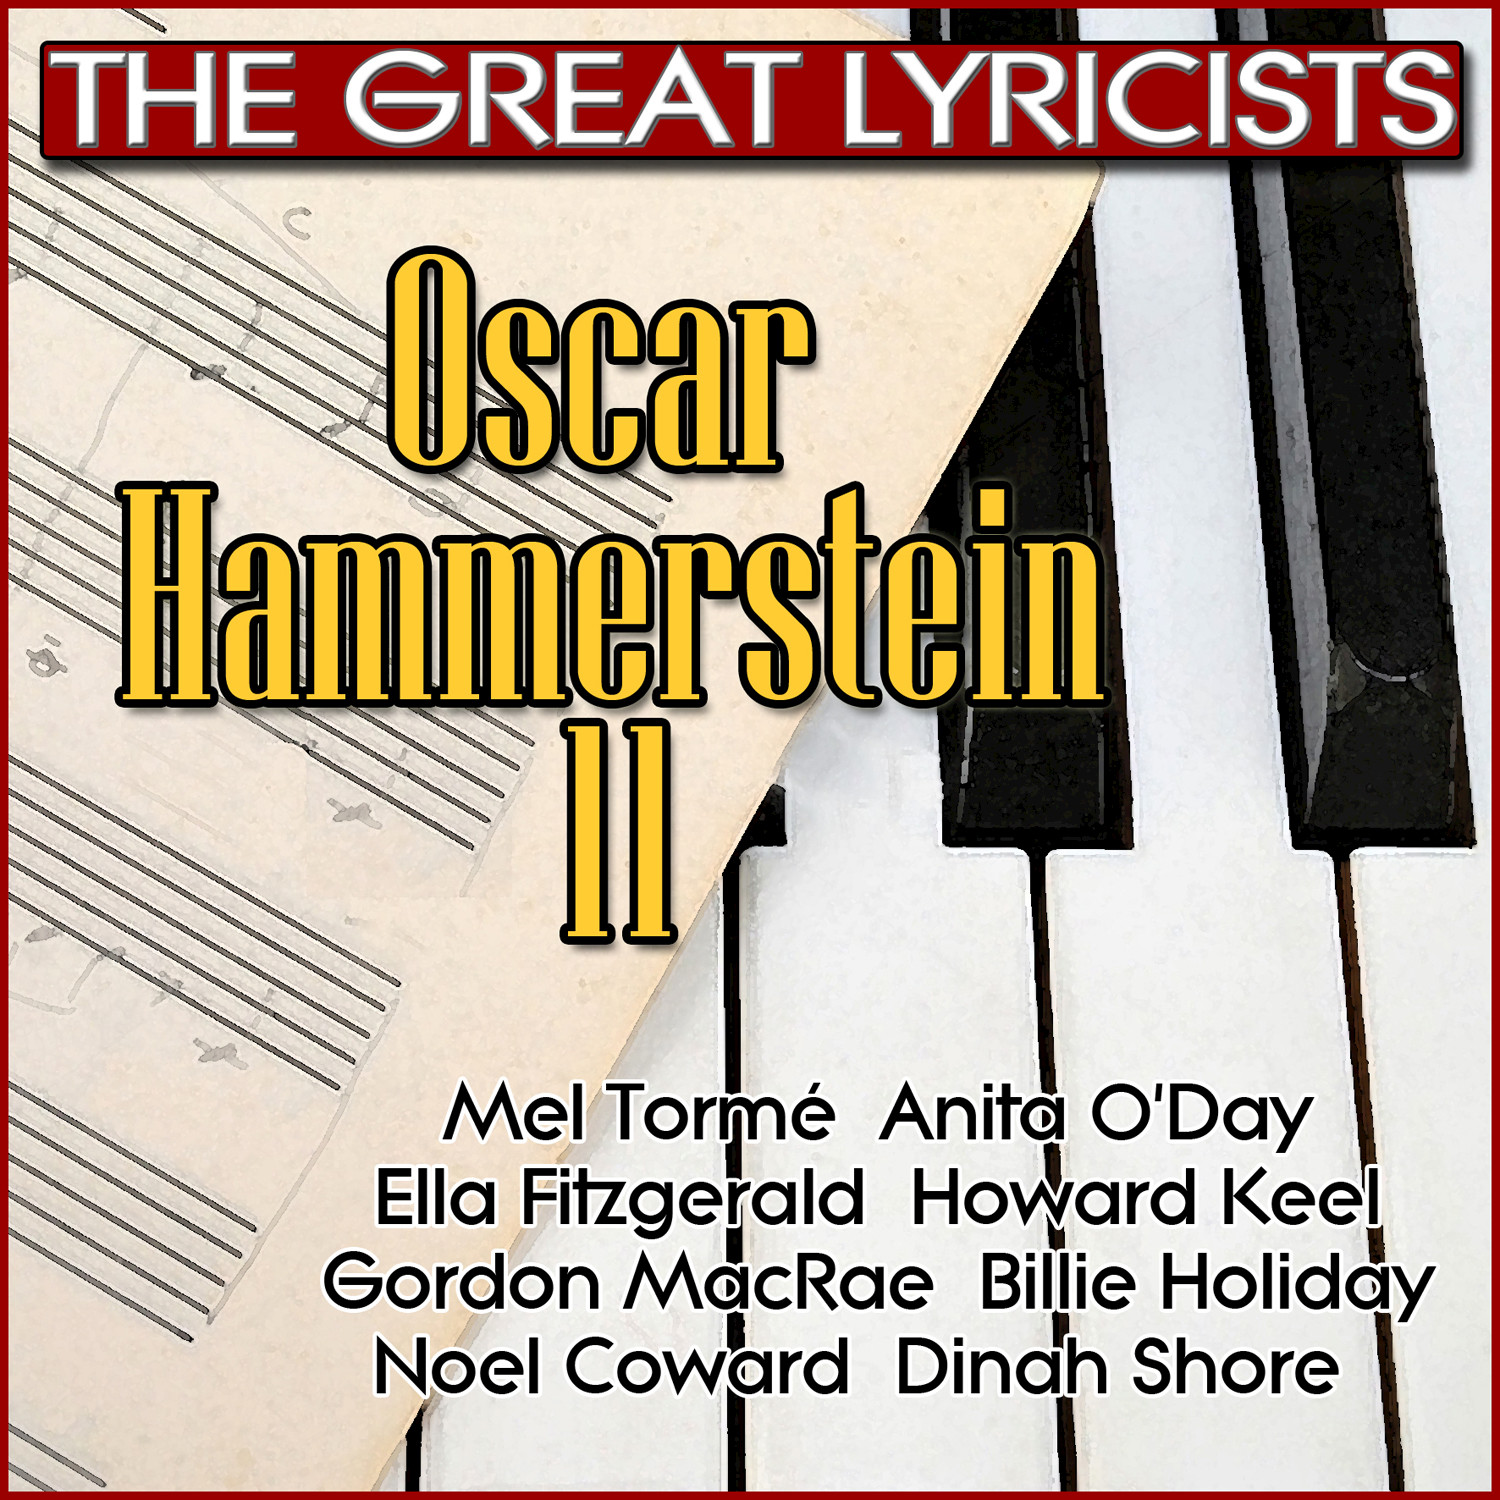 The Great Lyricists  Oscar Hammerstein II